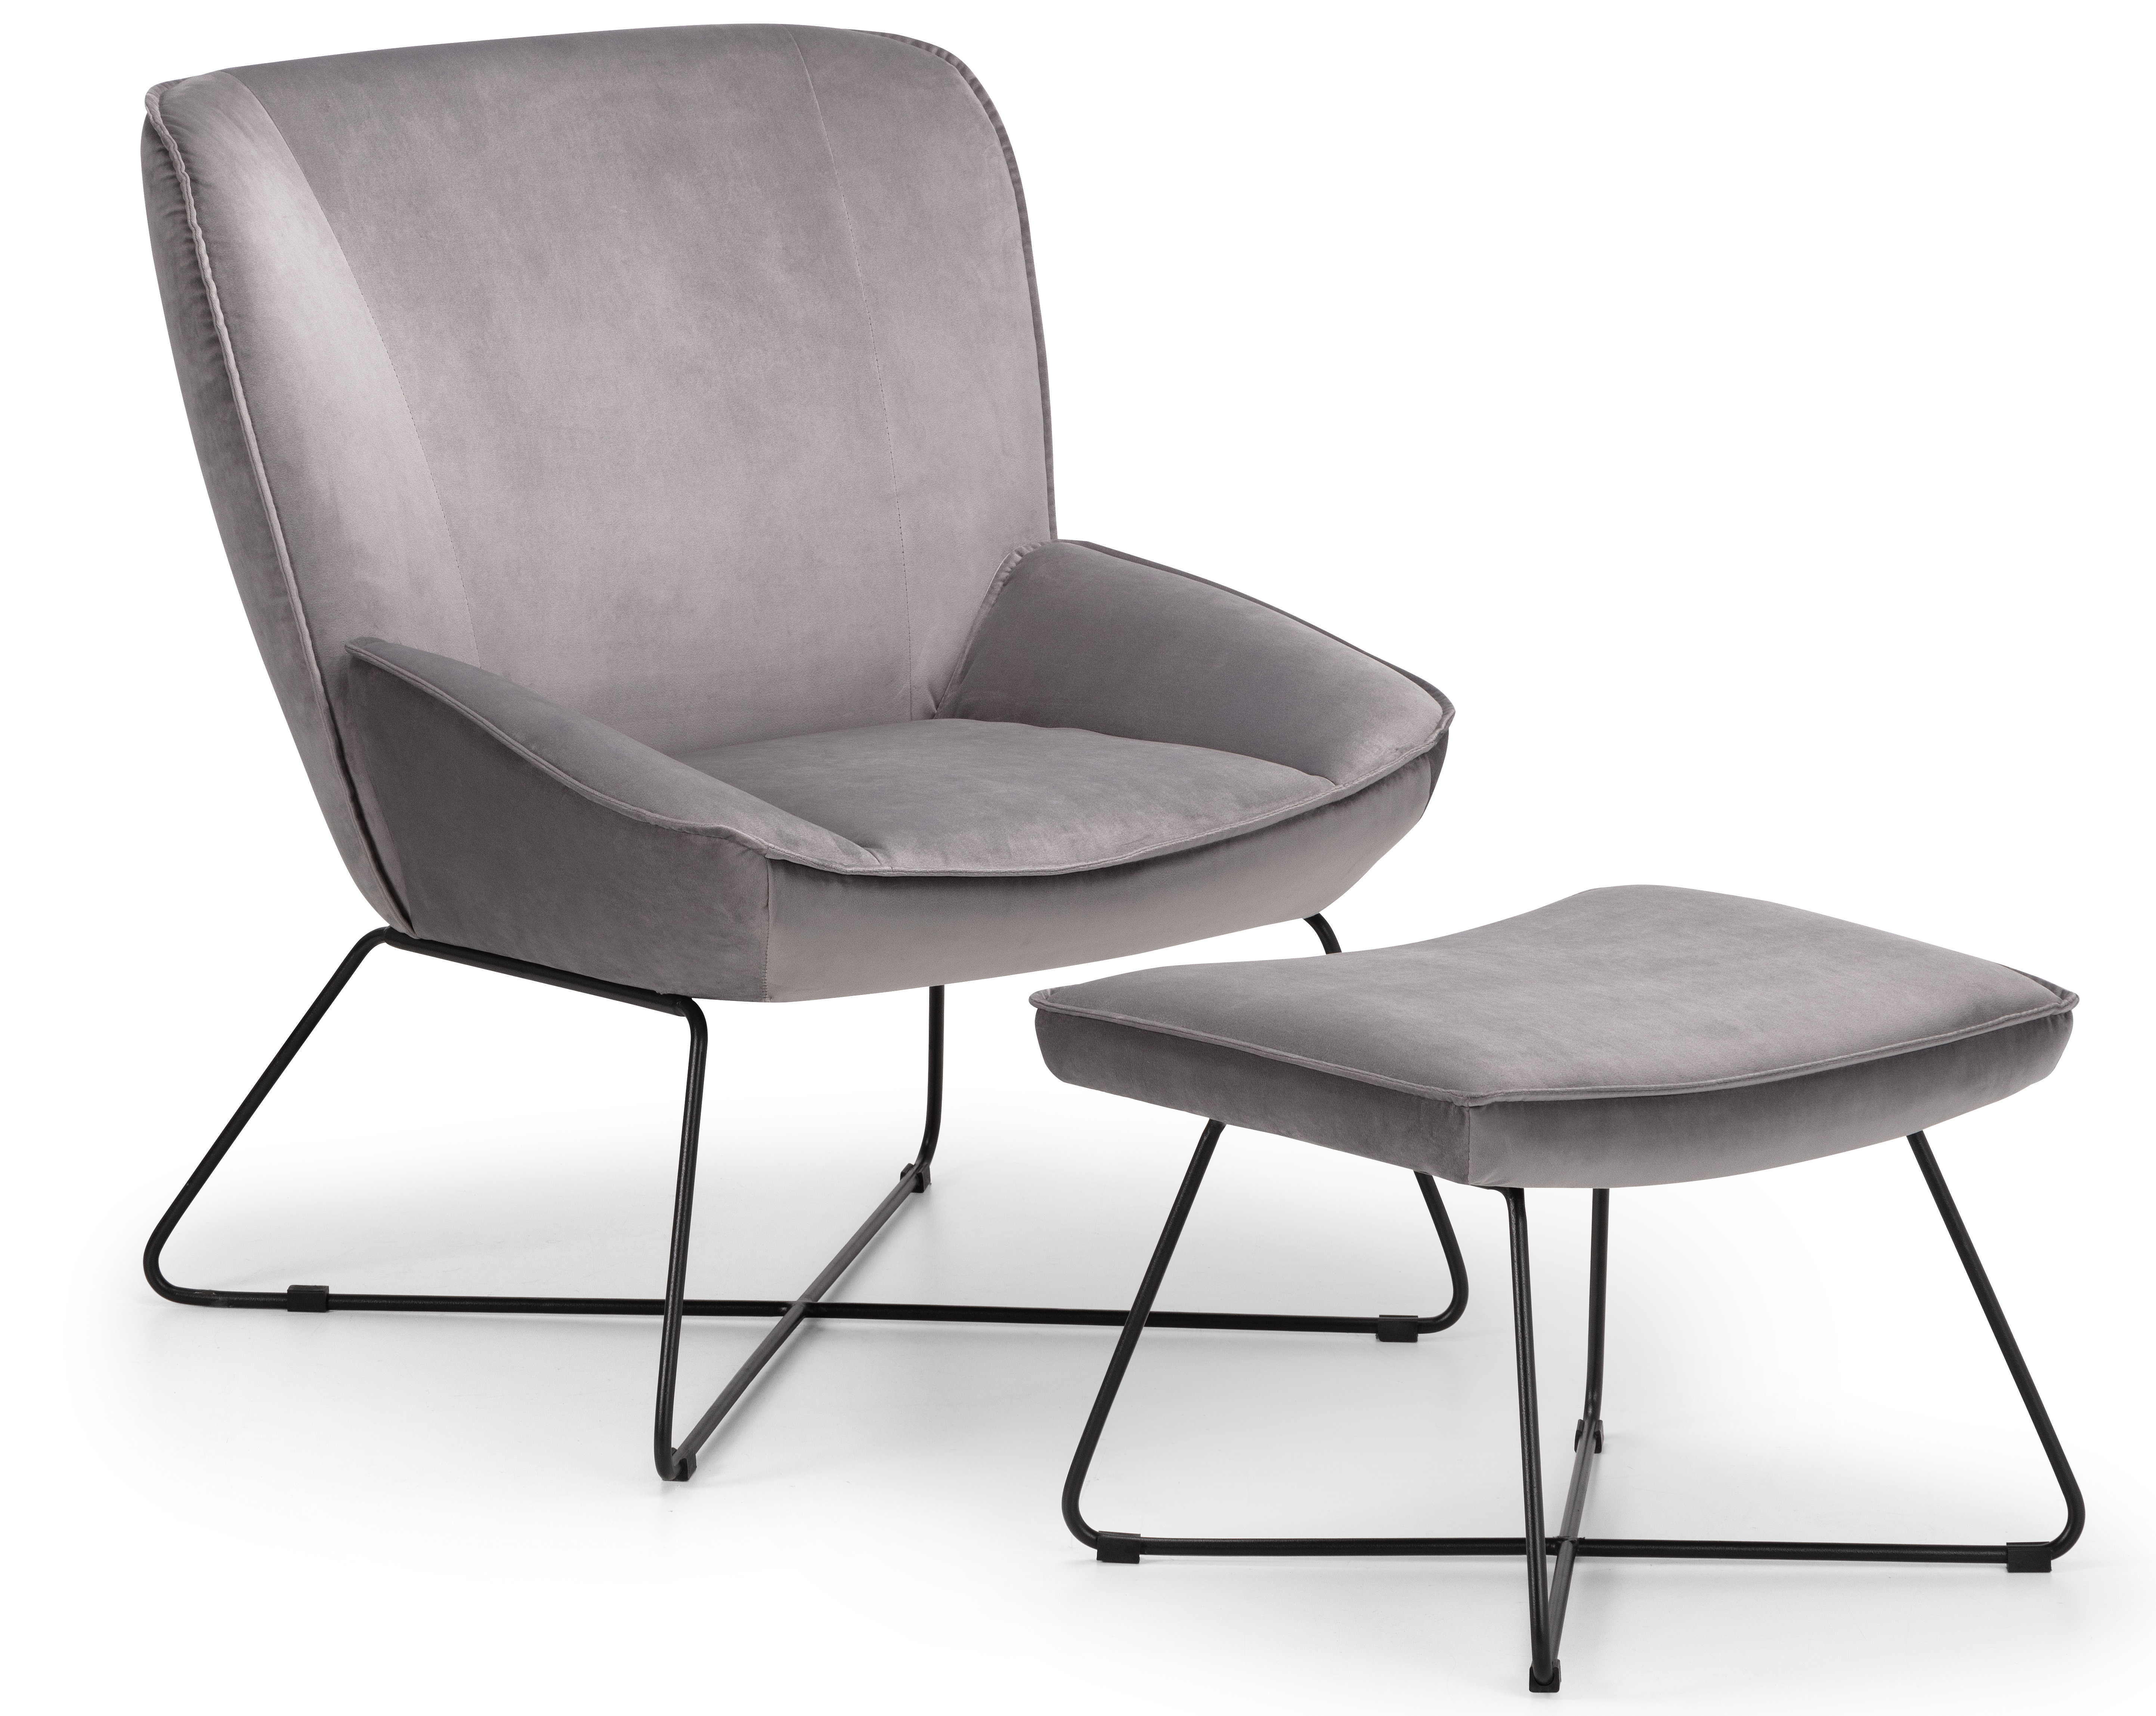 Zipcode Design Davis Lounge Chair And Footstool Reviews